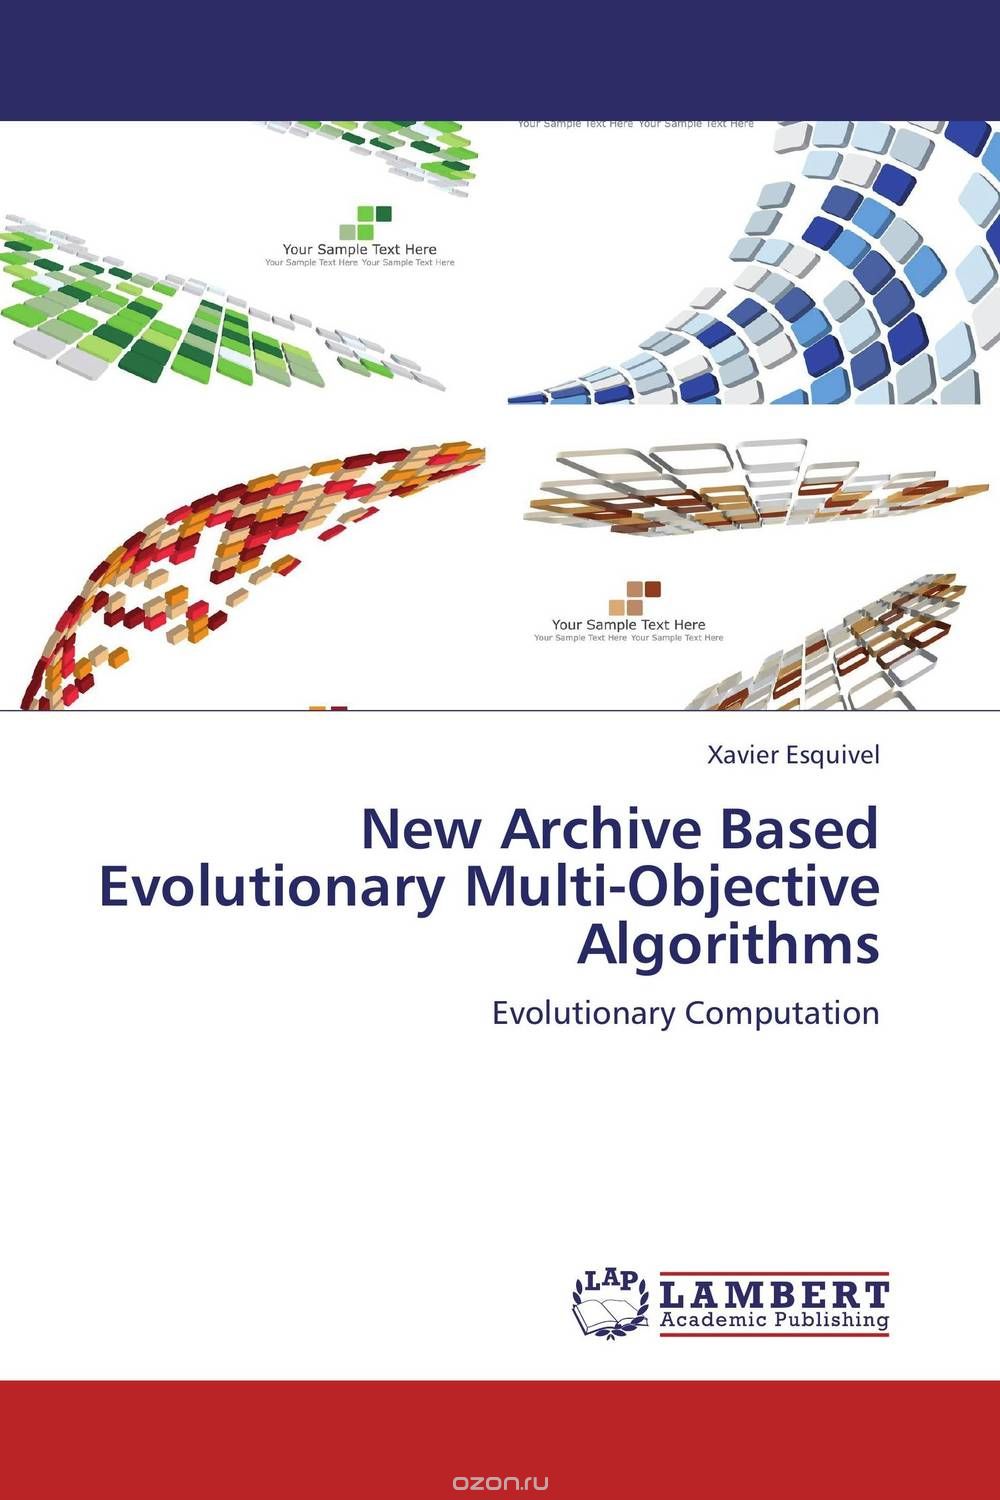 Скачать книгу "New Archive Based Evolutionary Multi-Objective Algorithms"